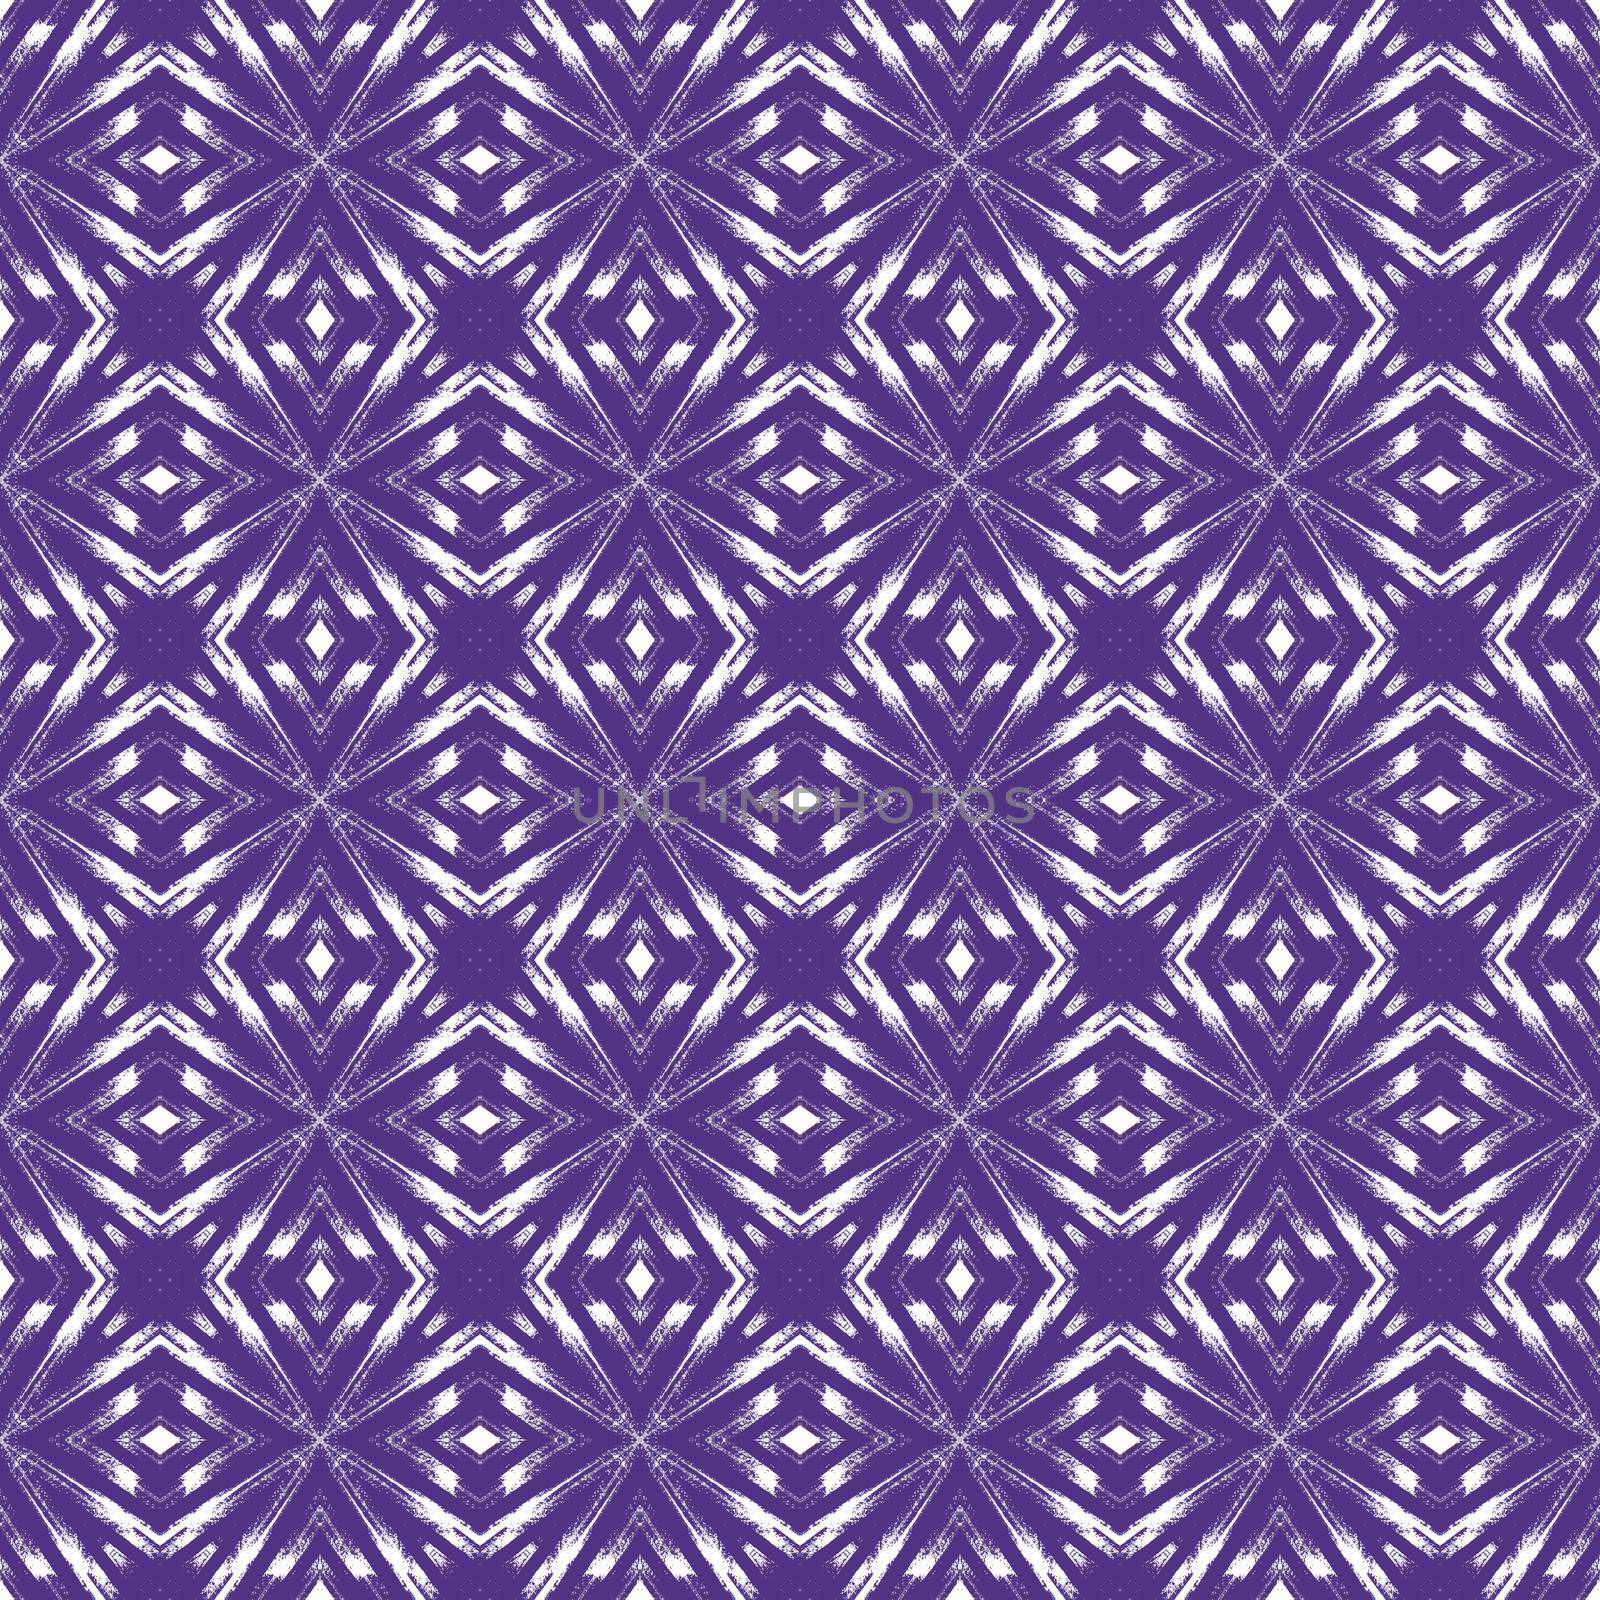 Striped hand drawn pattern. Purple symmetrical by beginagain